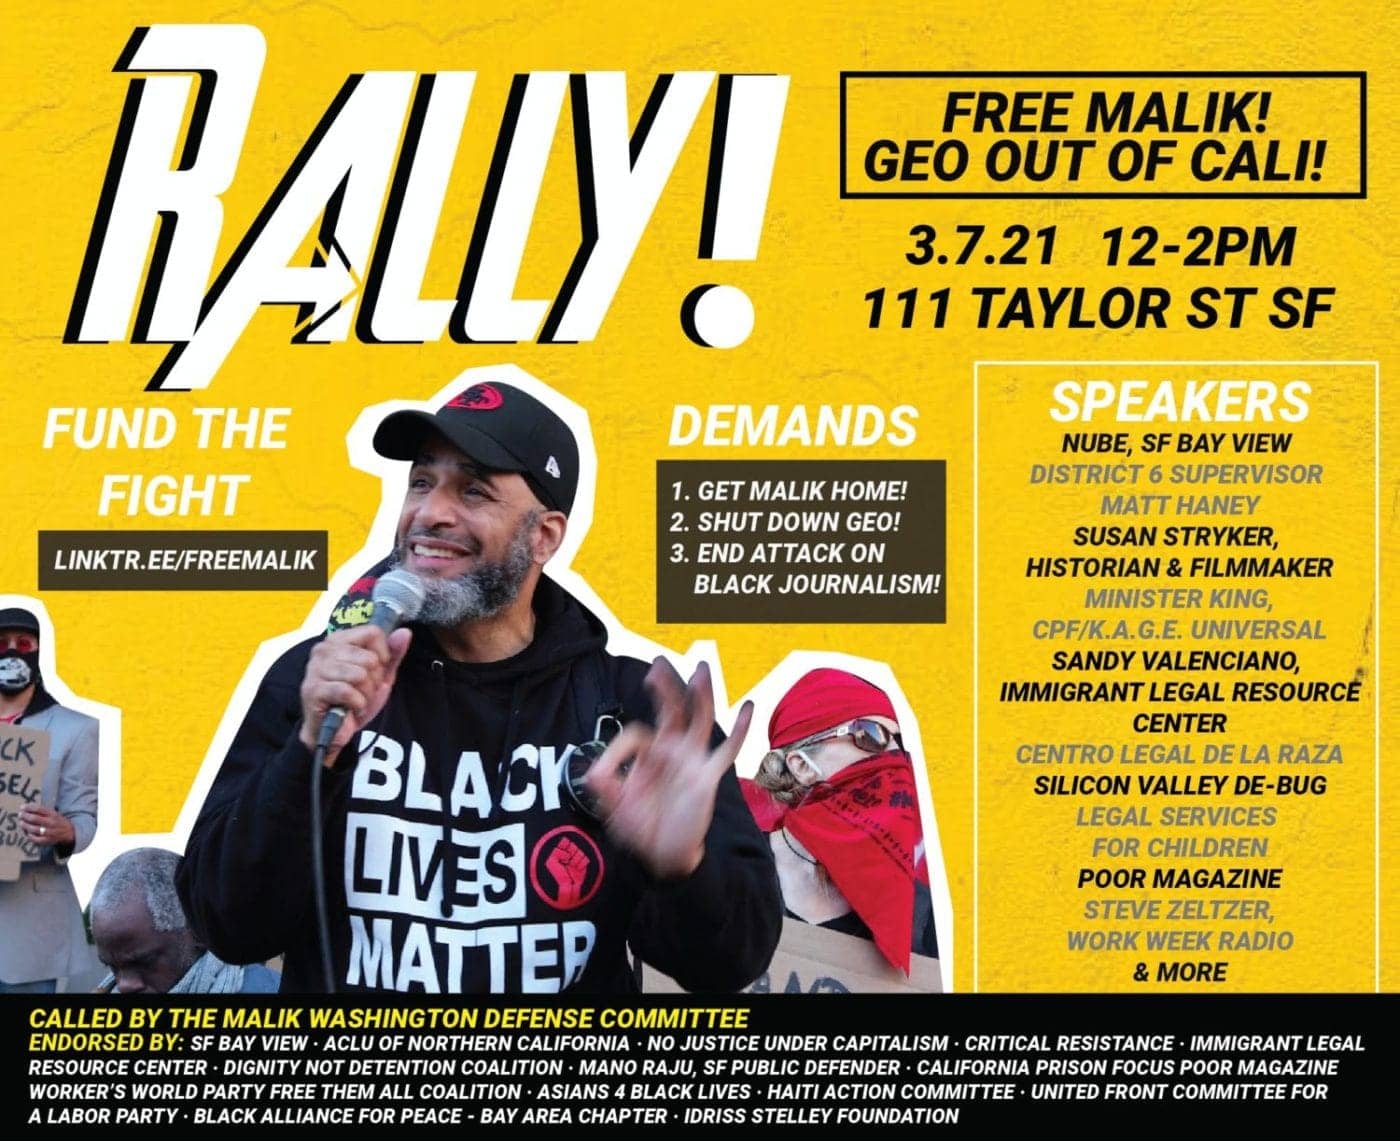 Free-Malik-Rally-0321-front-pg-1400x1141, Free Malik! Save the Bay View newspaper! Rally Sunday, March 7, 12-2pm, 111 Taylor, San Francisco, Local News & Views 